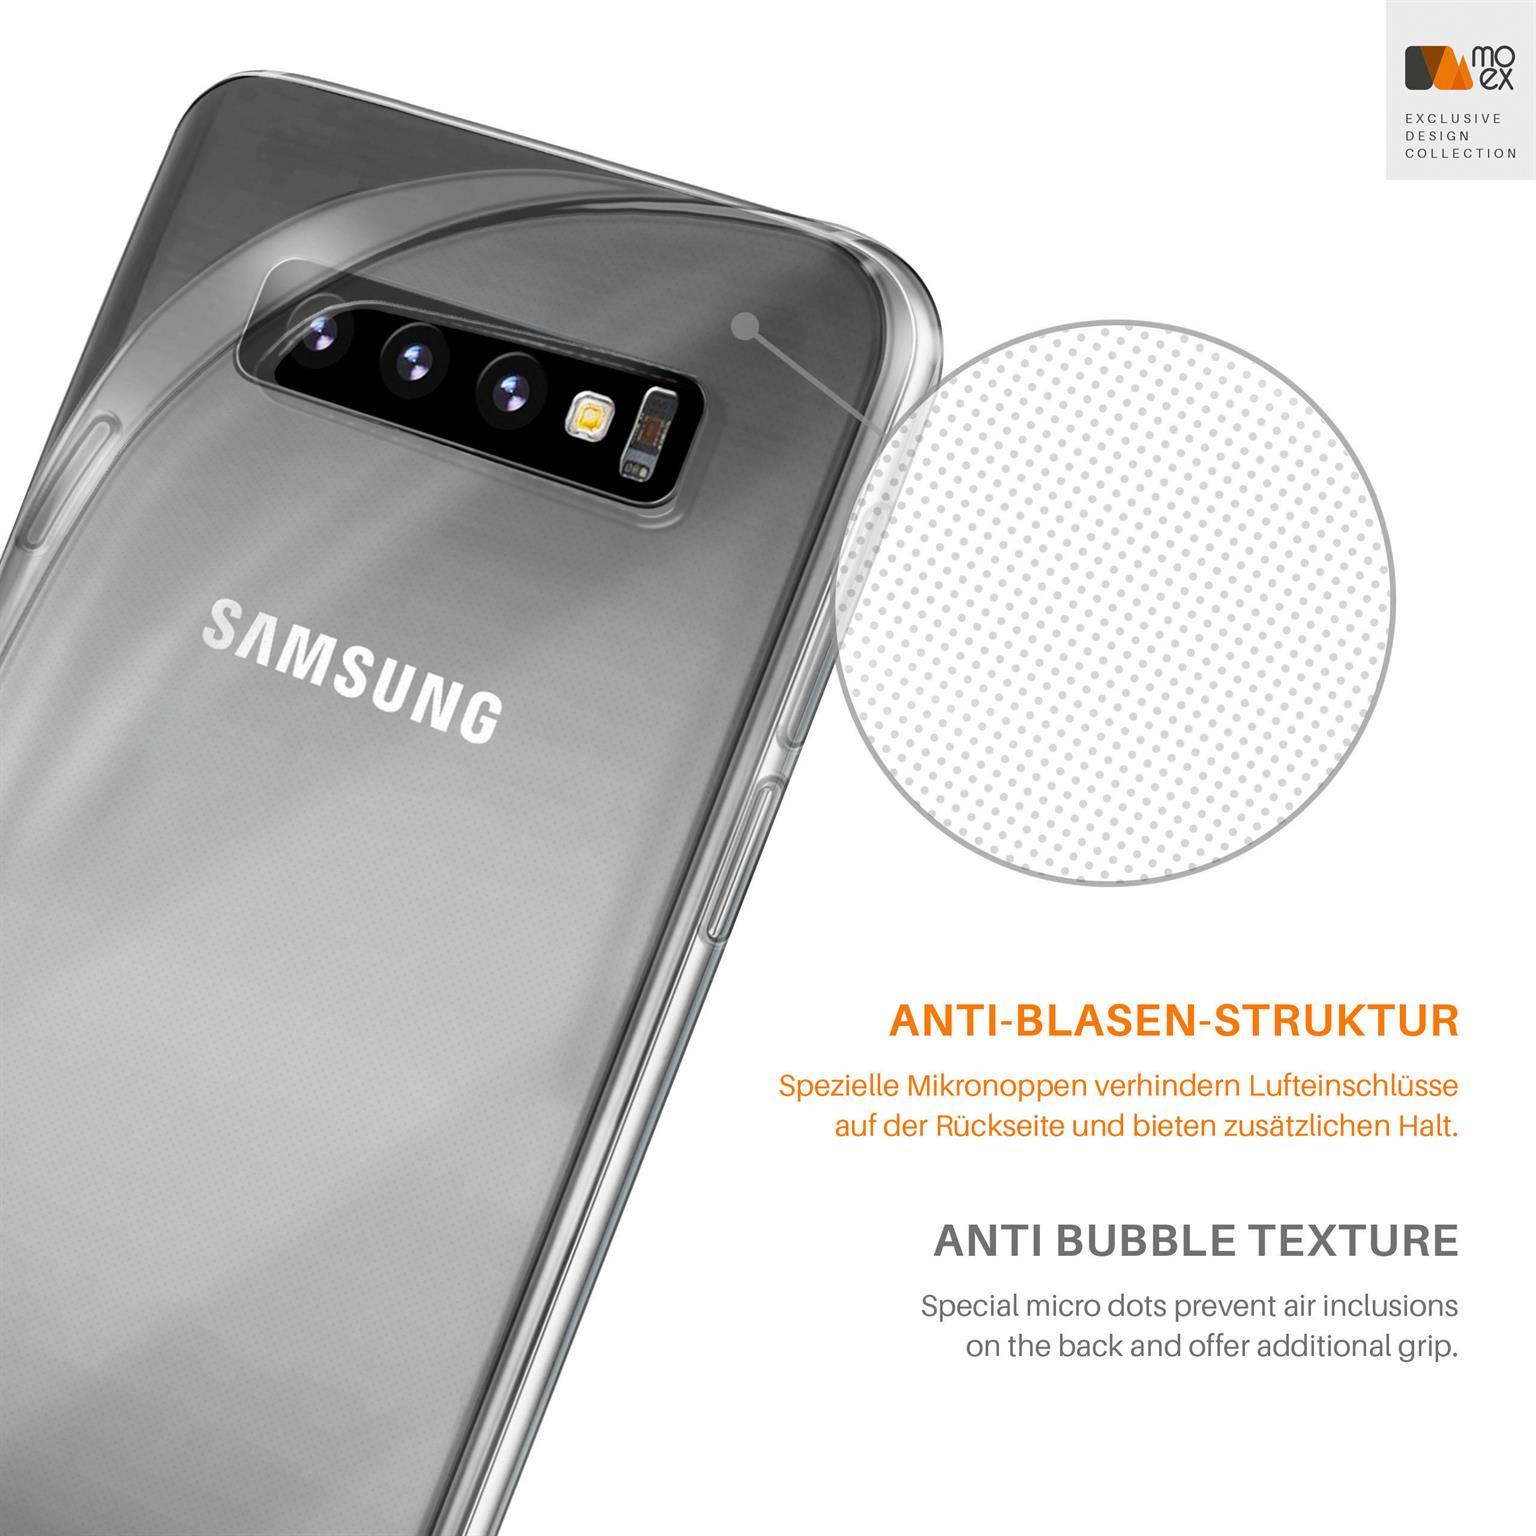 MOEX Aero Case, Backcover, Samsung, Crystal-Clear Galaxy S10